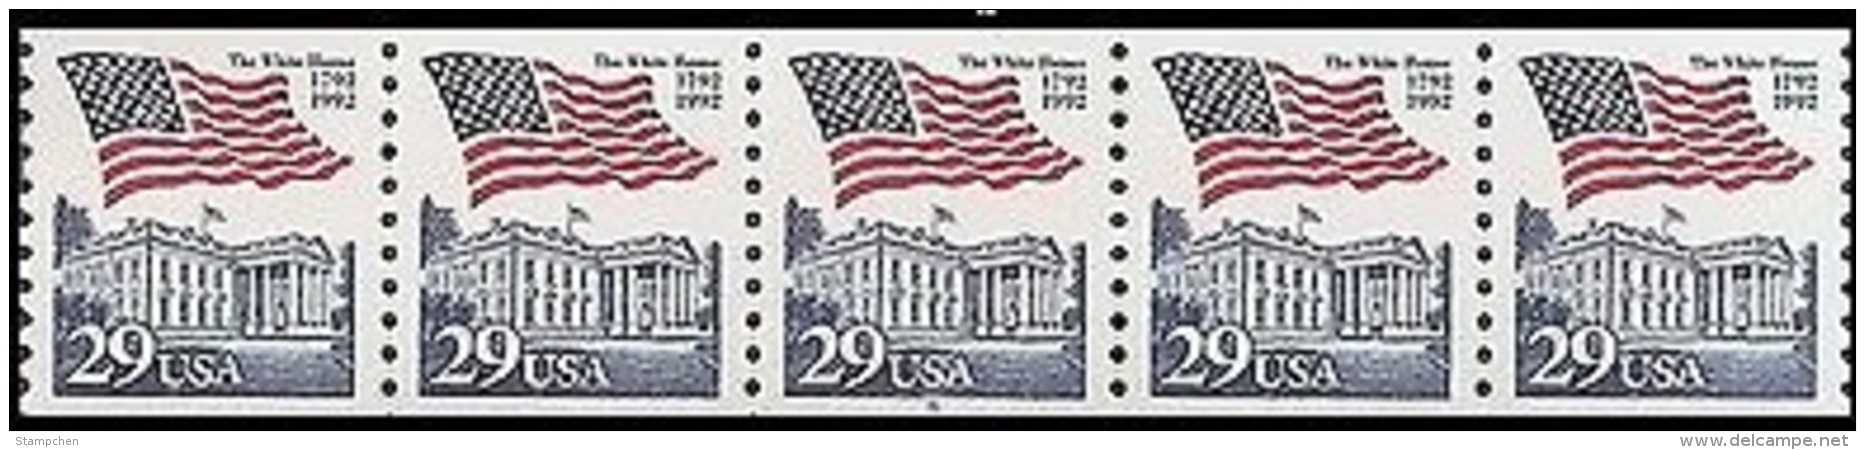 1992 USA Flag Over The White House PNC5 Plate Number Coil Strip PI #7 Sc#2609 Post - Roulettes (Numéros De Planches)